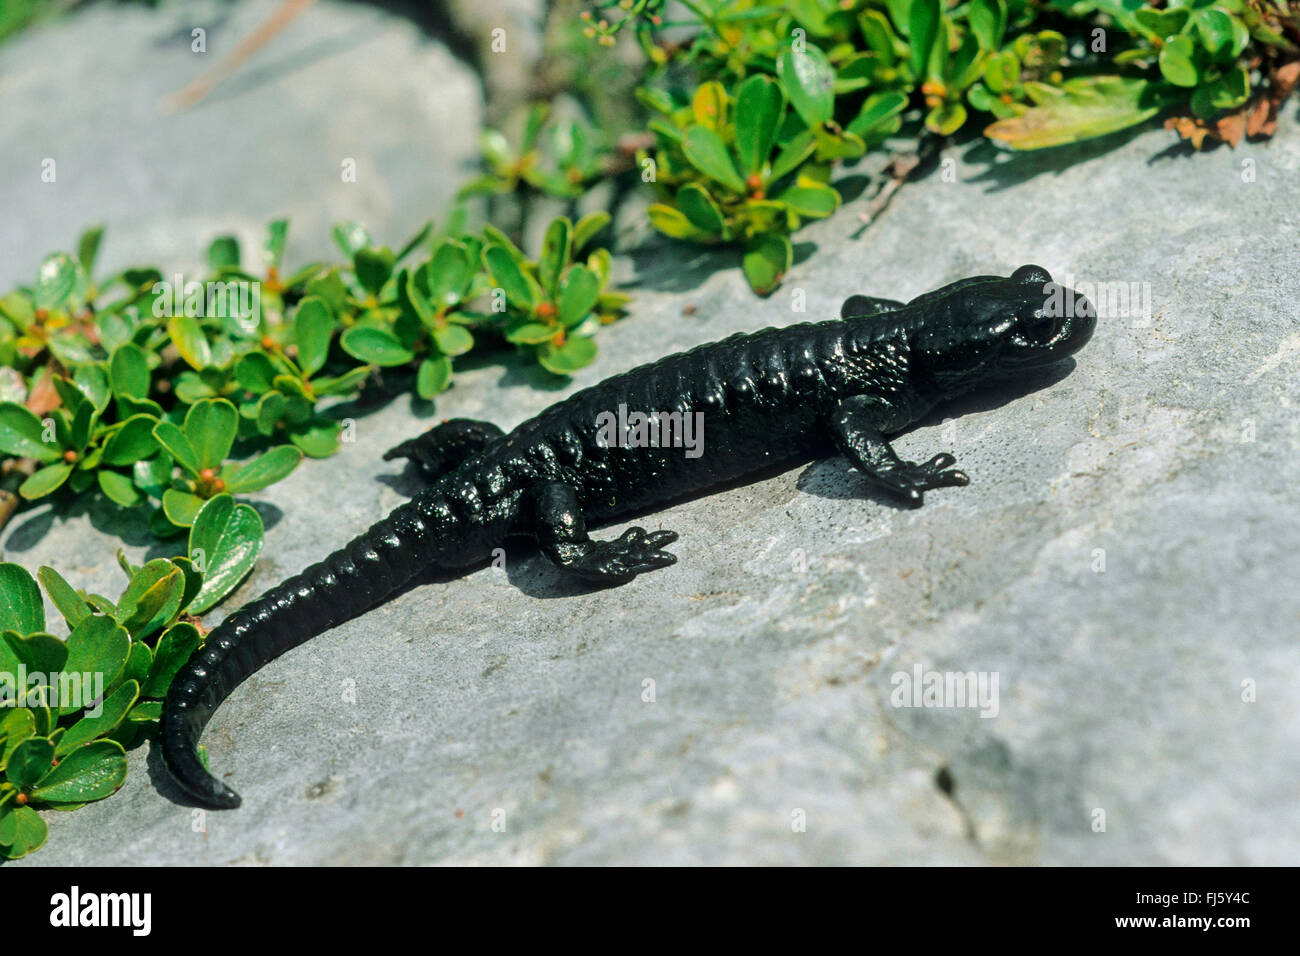 Alpine salamander, European Alpine salamander (Salamandra atra), sits on a stone, Germany Stock Photo